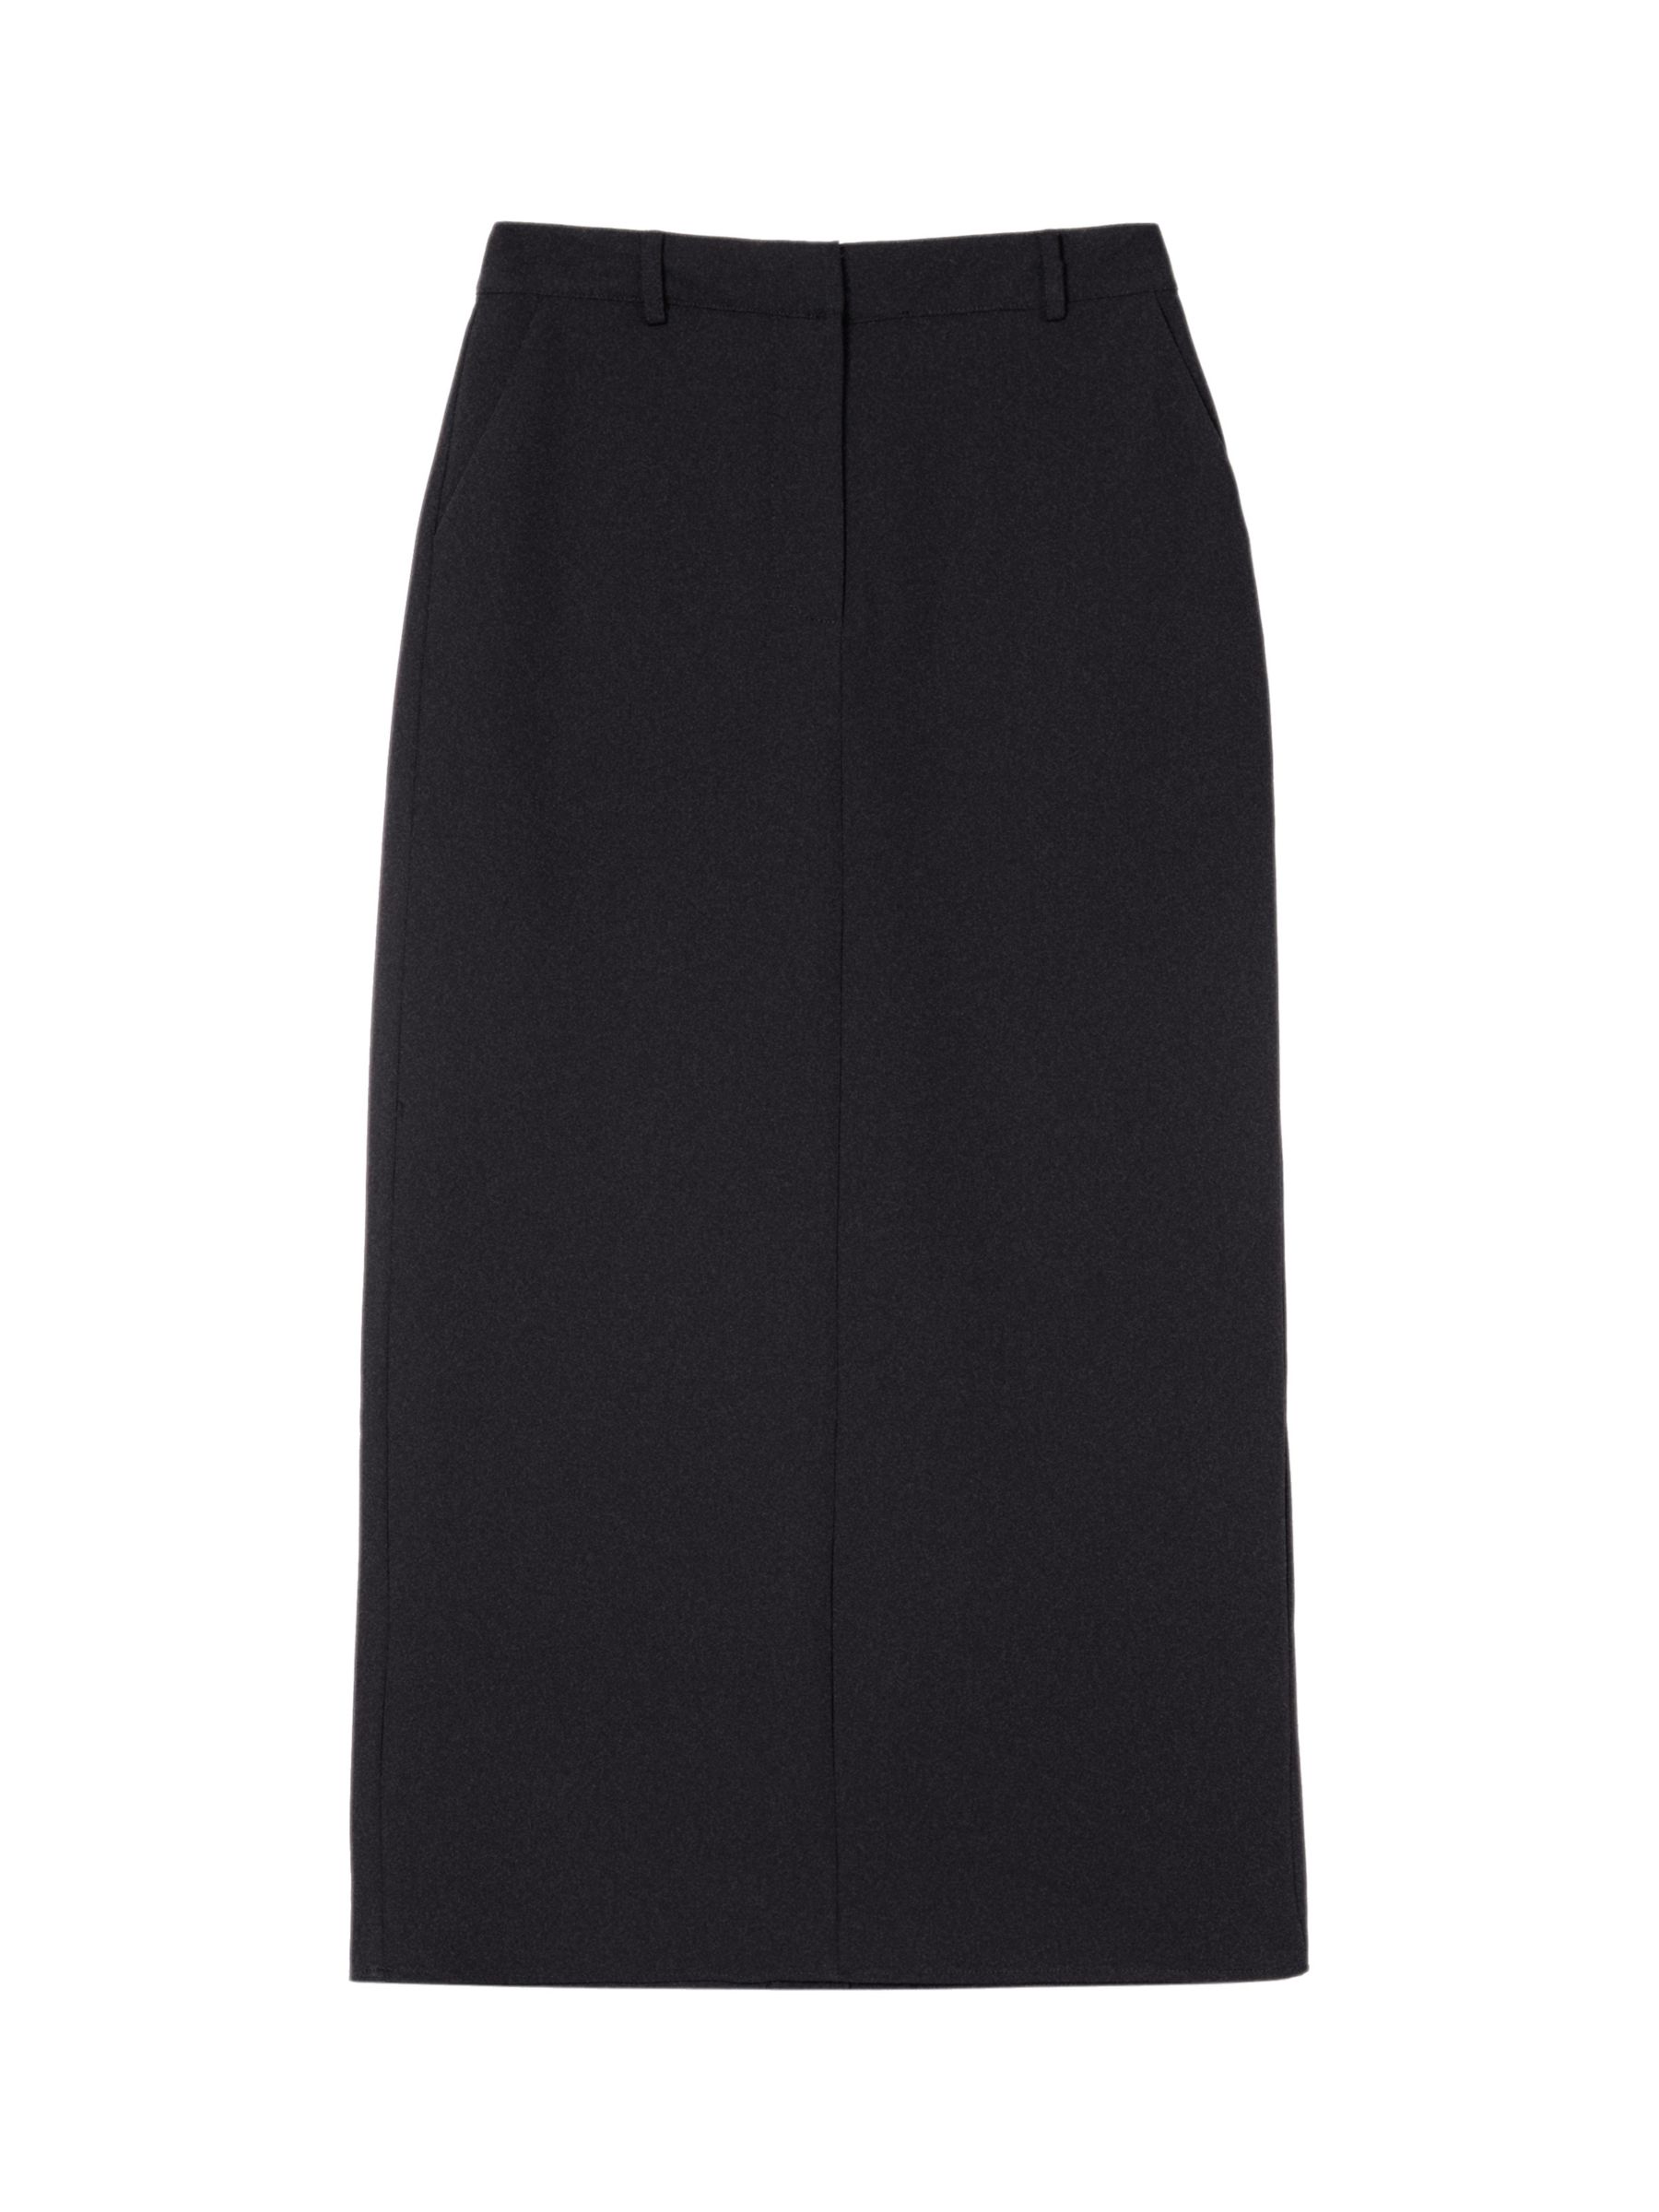 Buy Albaray Tailored Maxi Skirt, Black Online at johnlewis.com